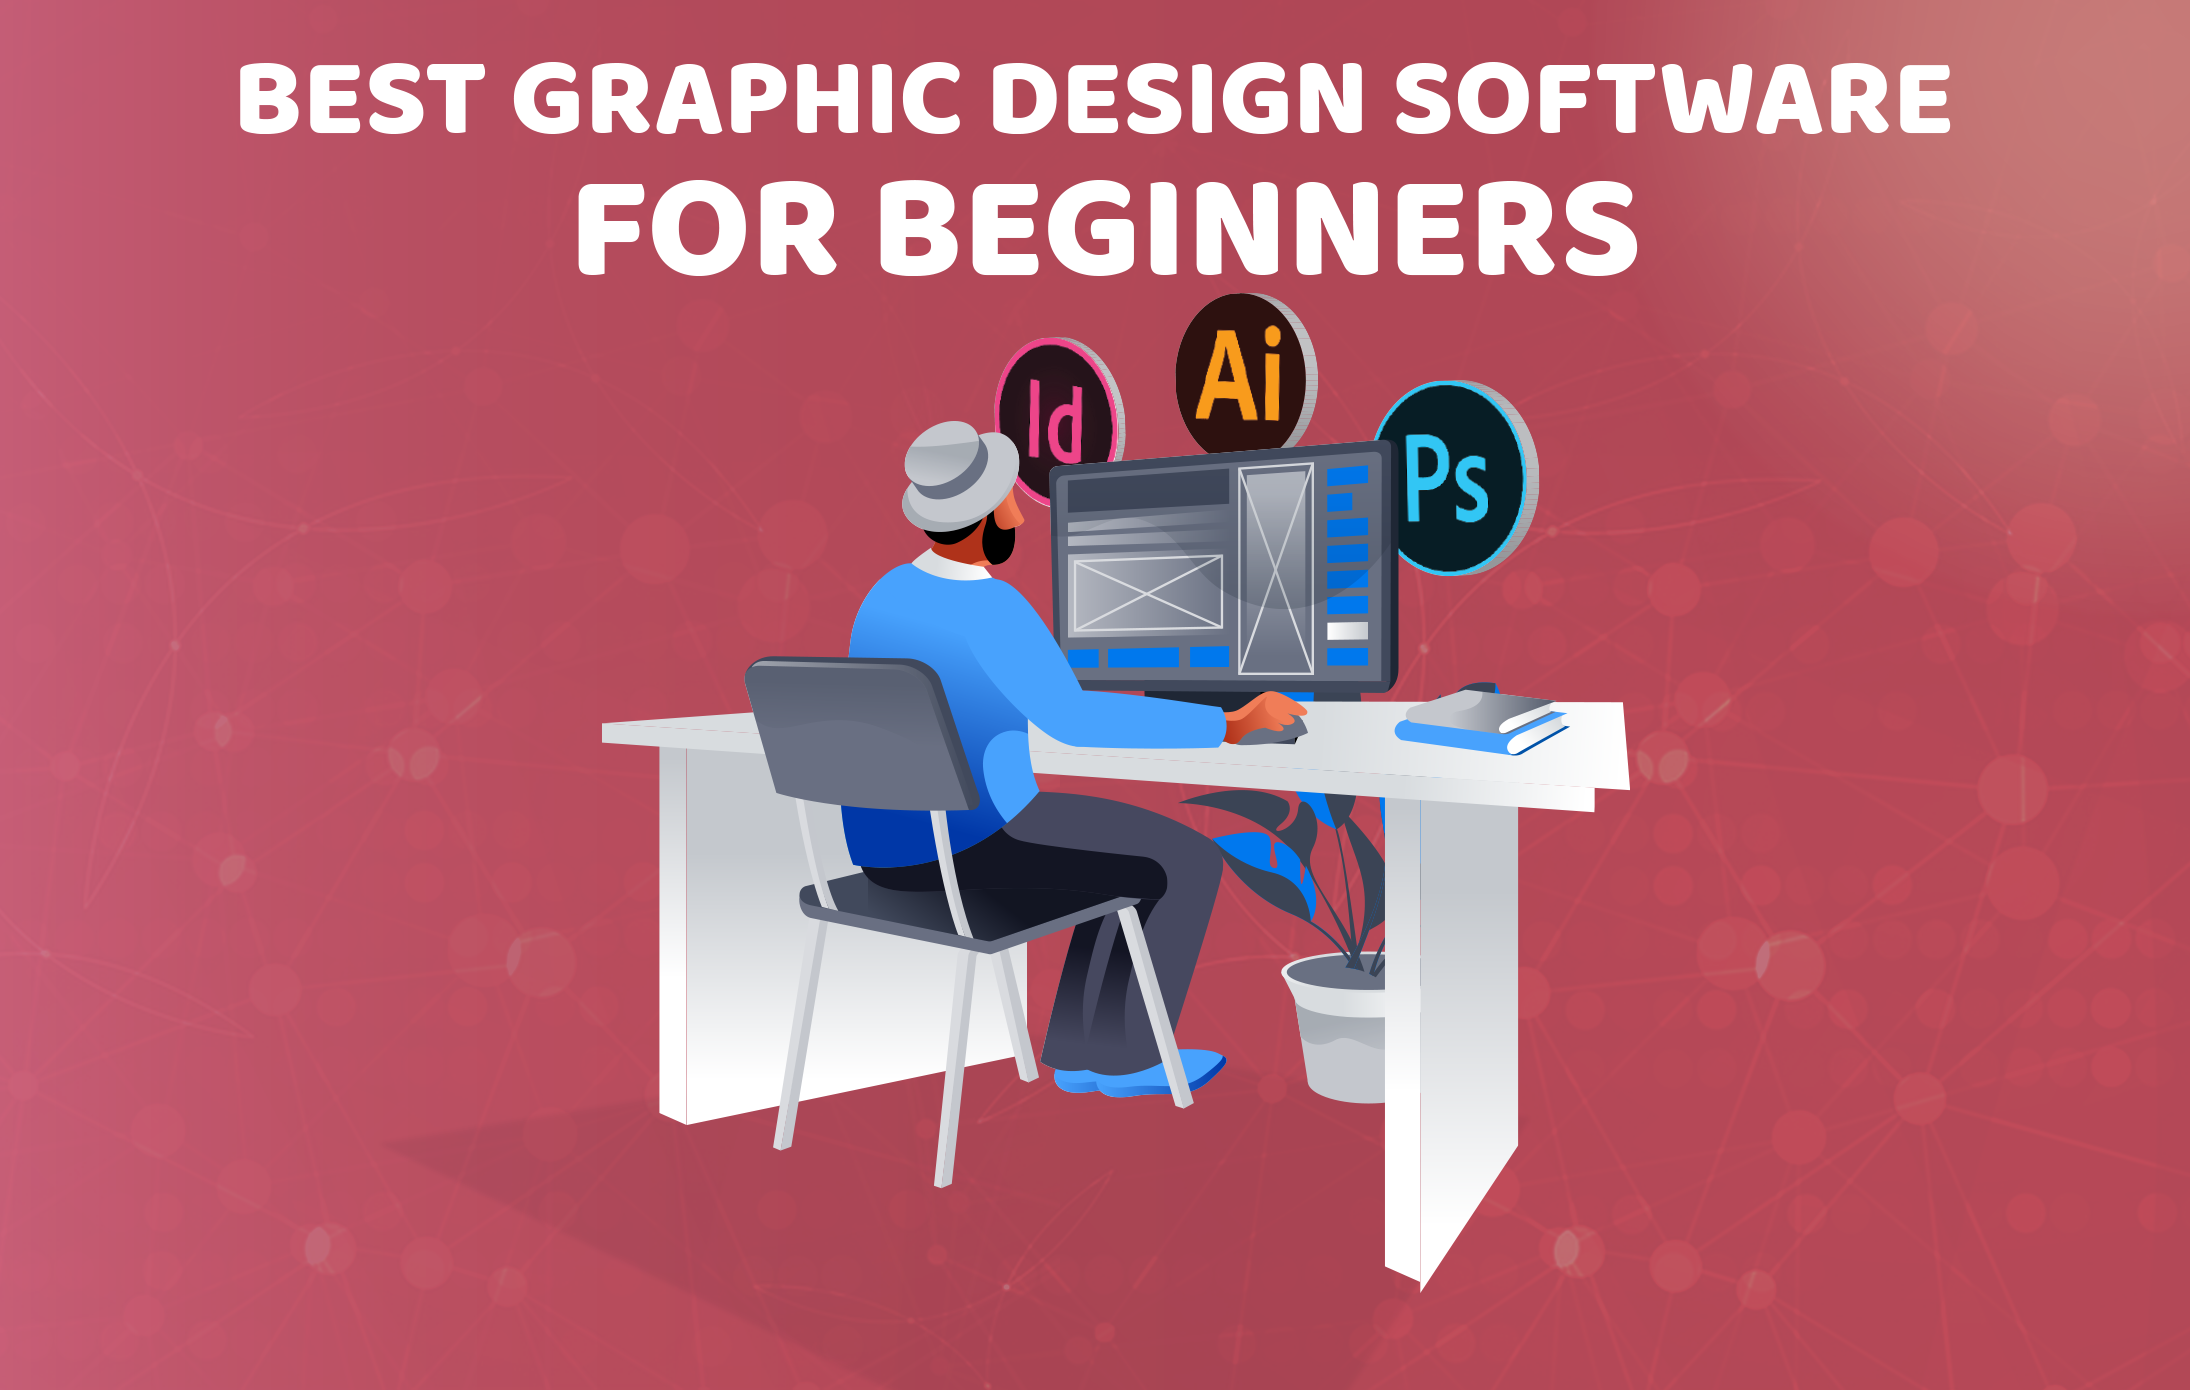 basic graphic design software free download